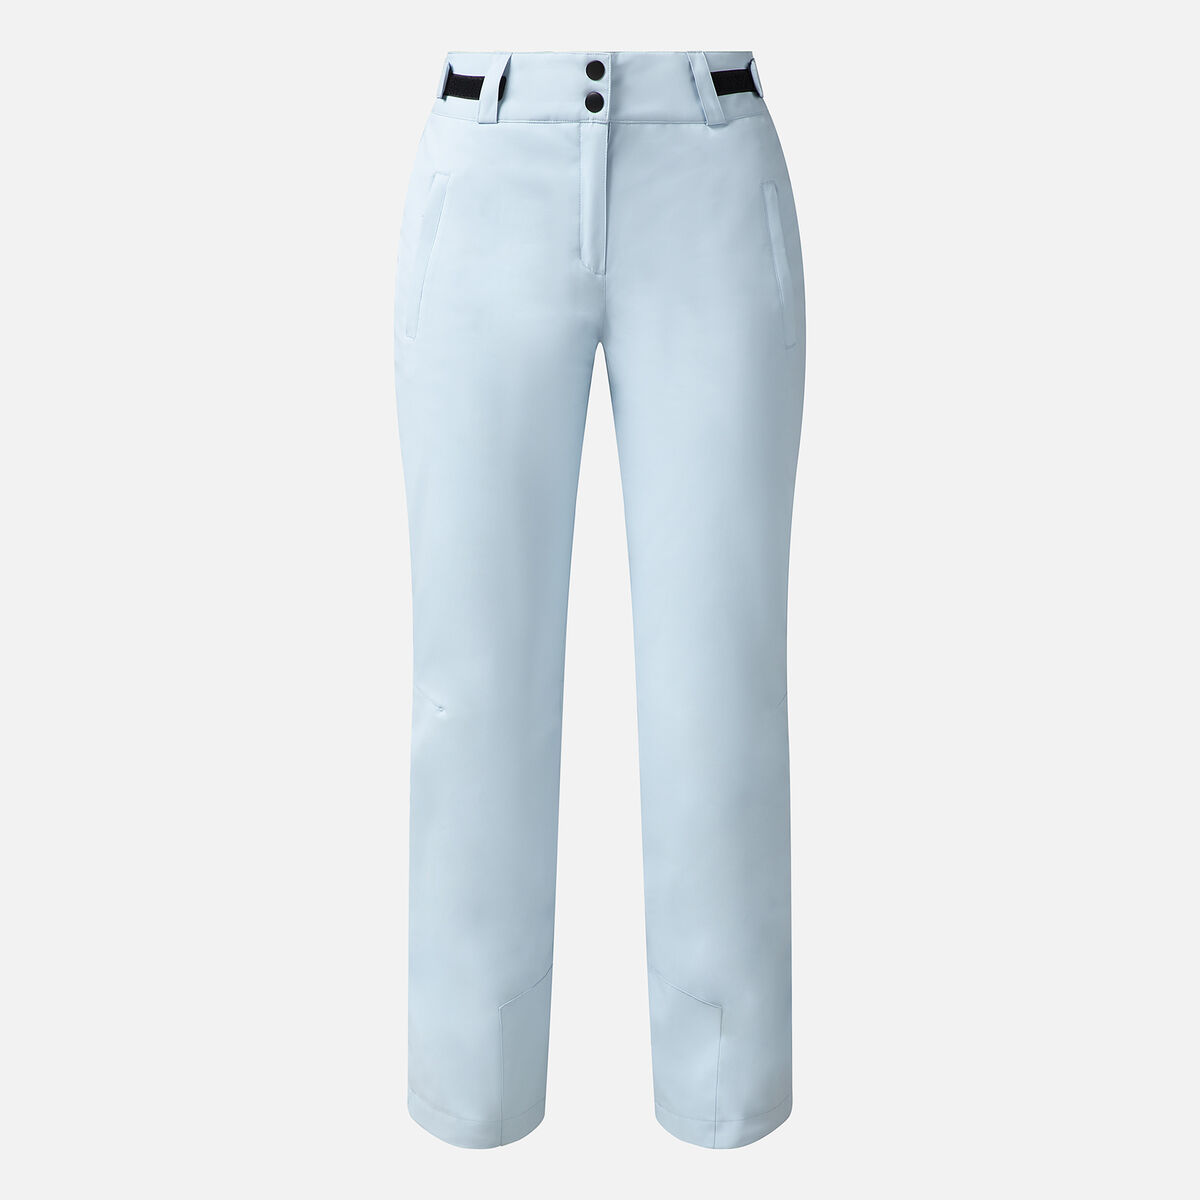 Rossignol Women's Staci Ski Pants blue